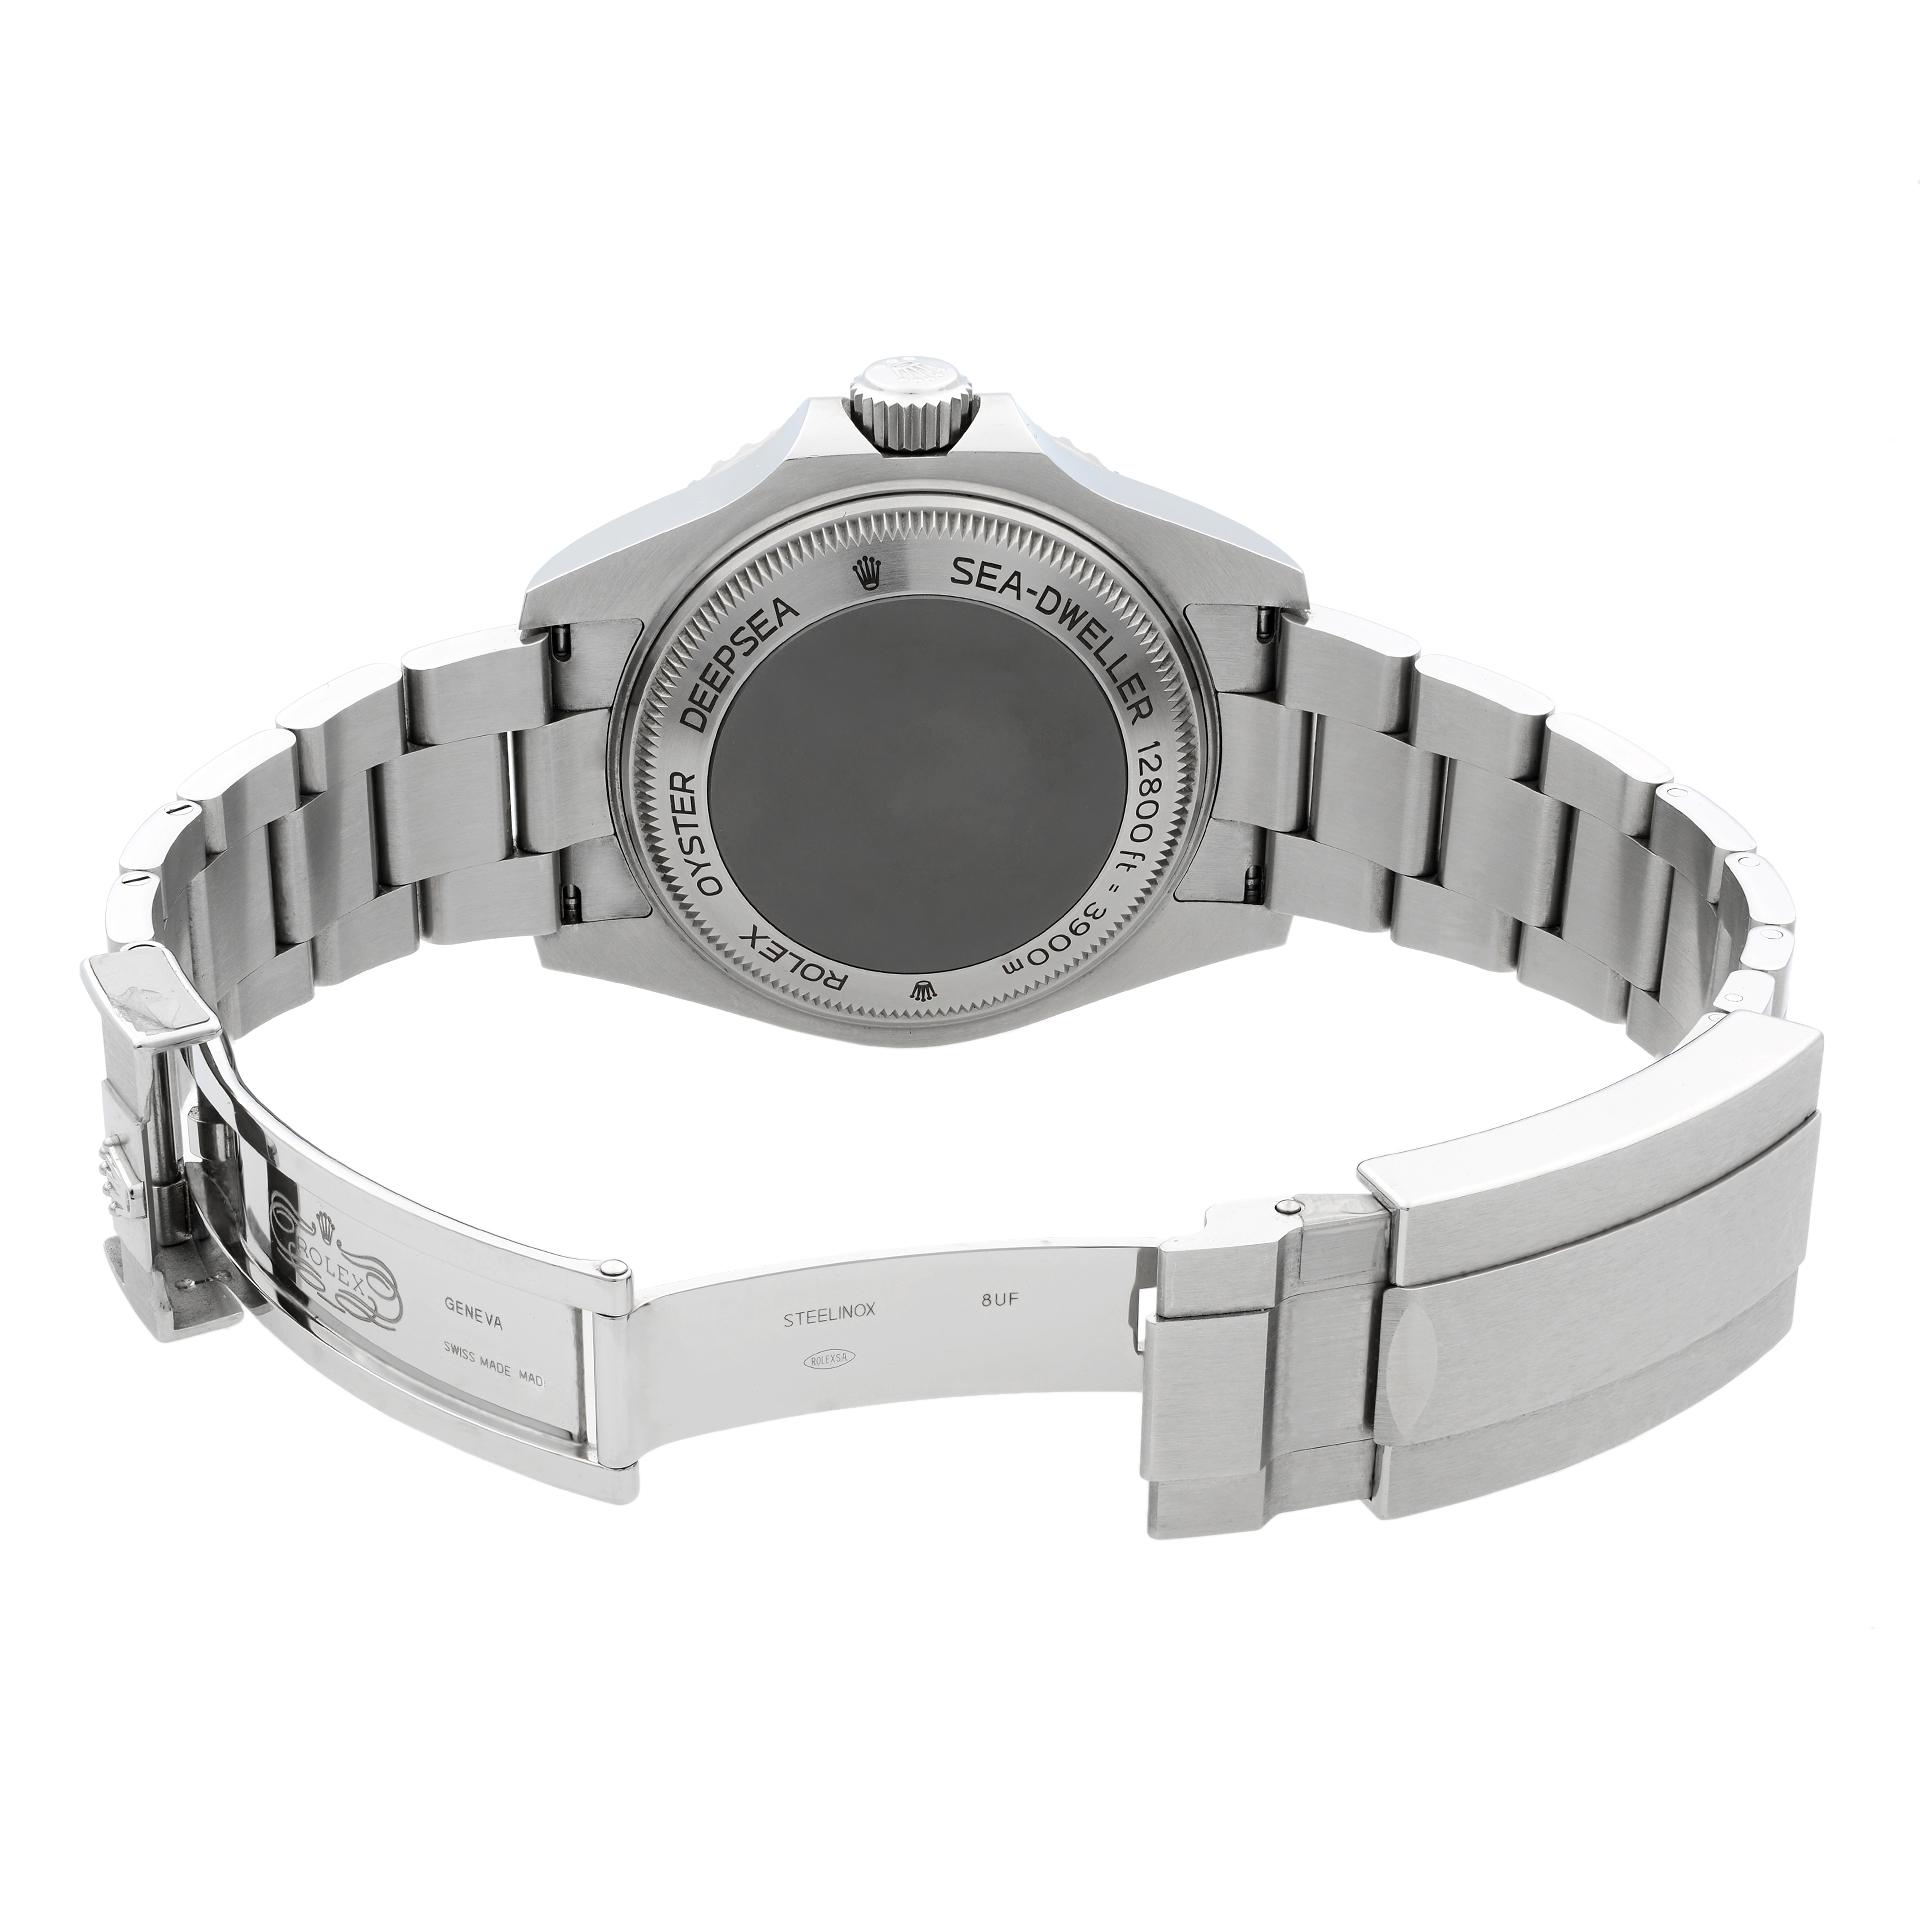 5th image of Rolex Rolex Sea-Dweller 126660 Wristwatch